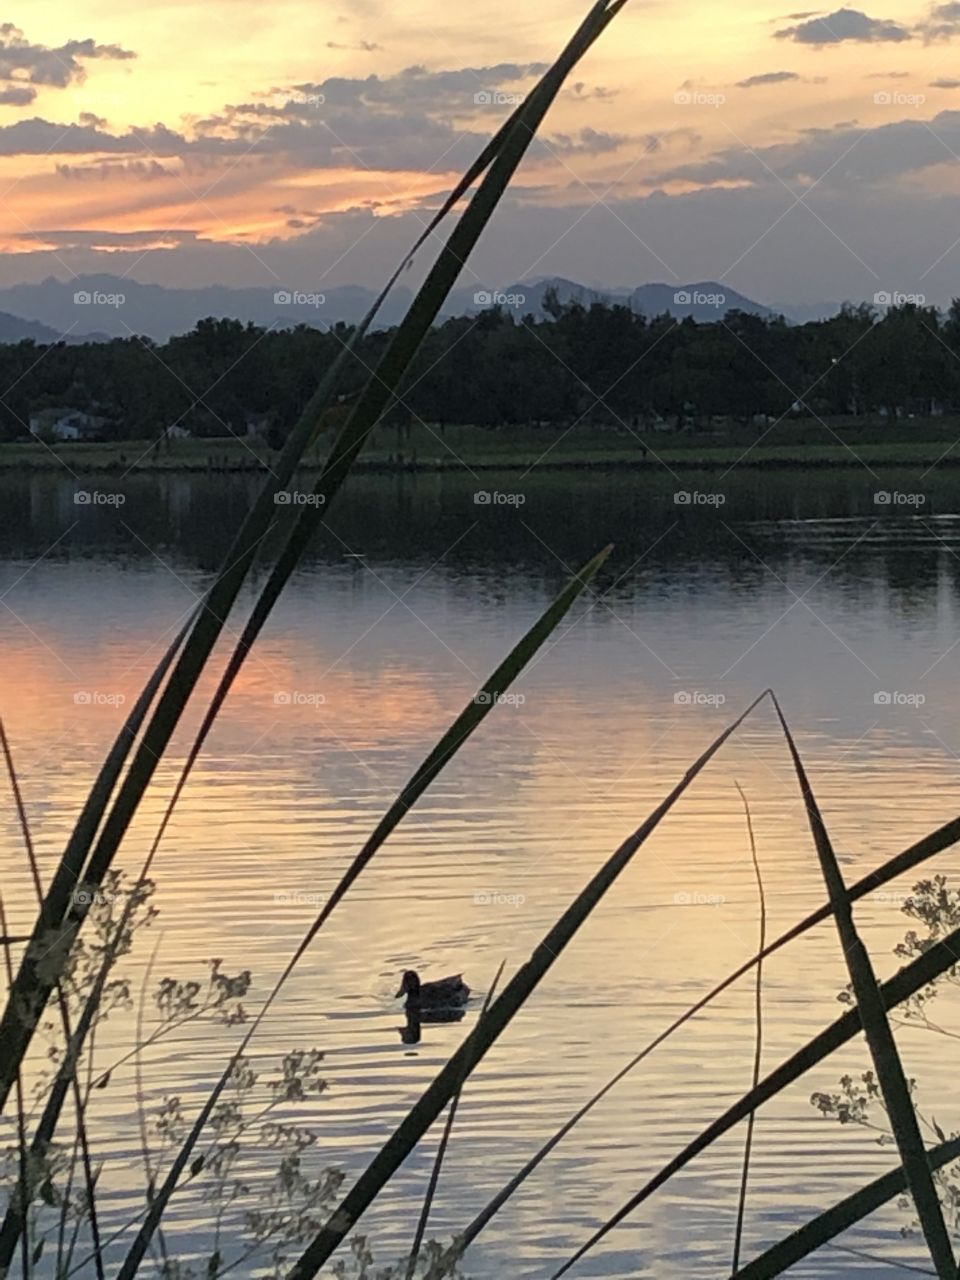 Duck swimming on Lake at sunset 